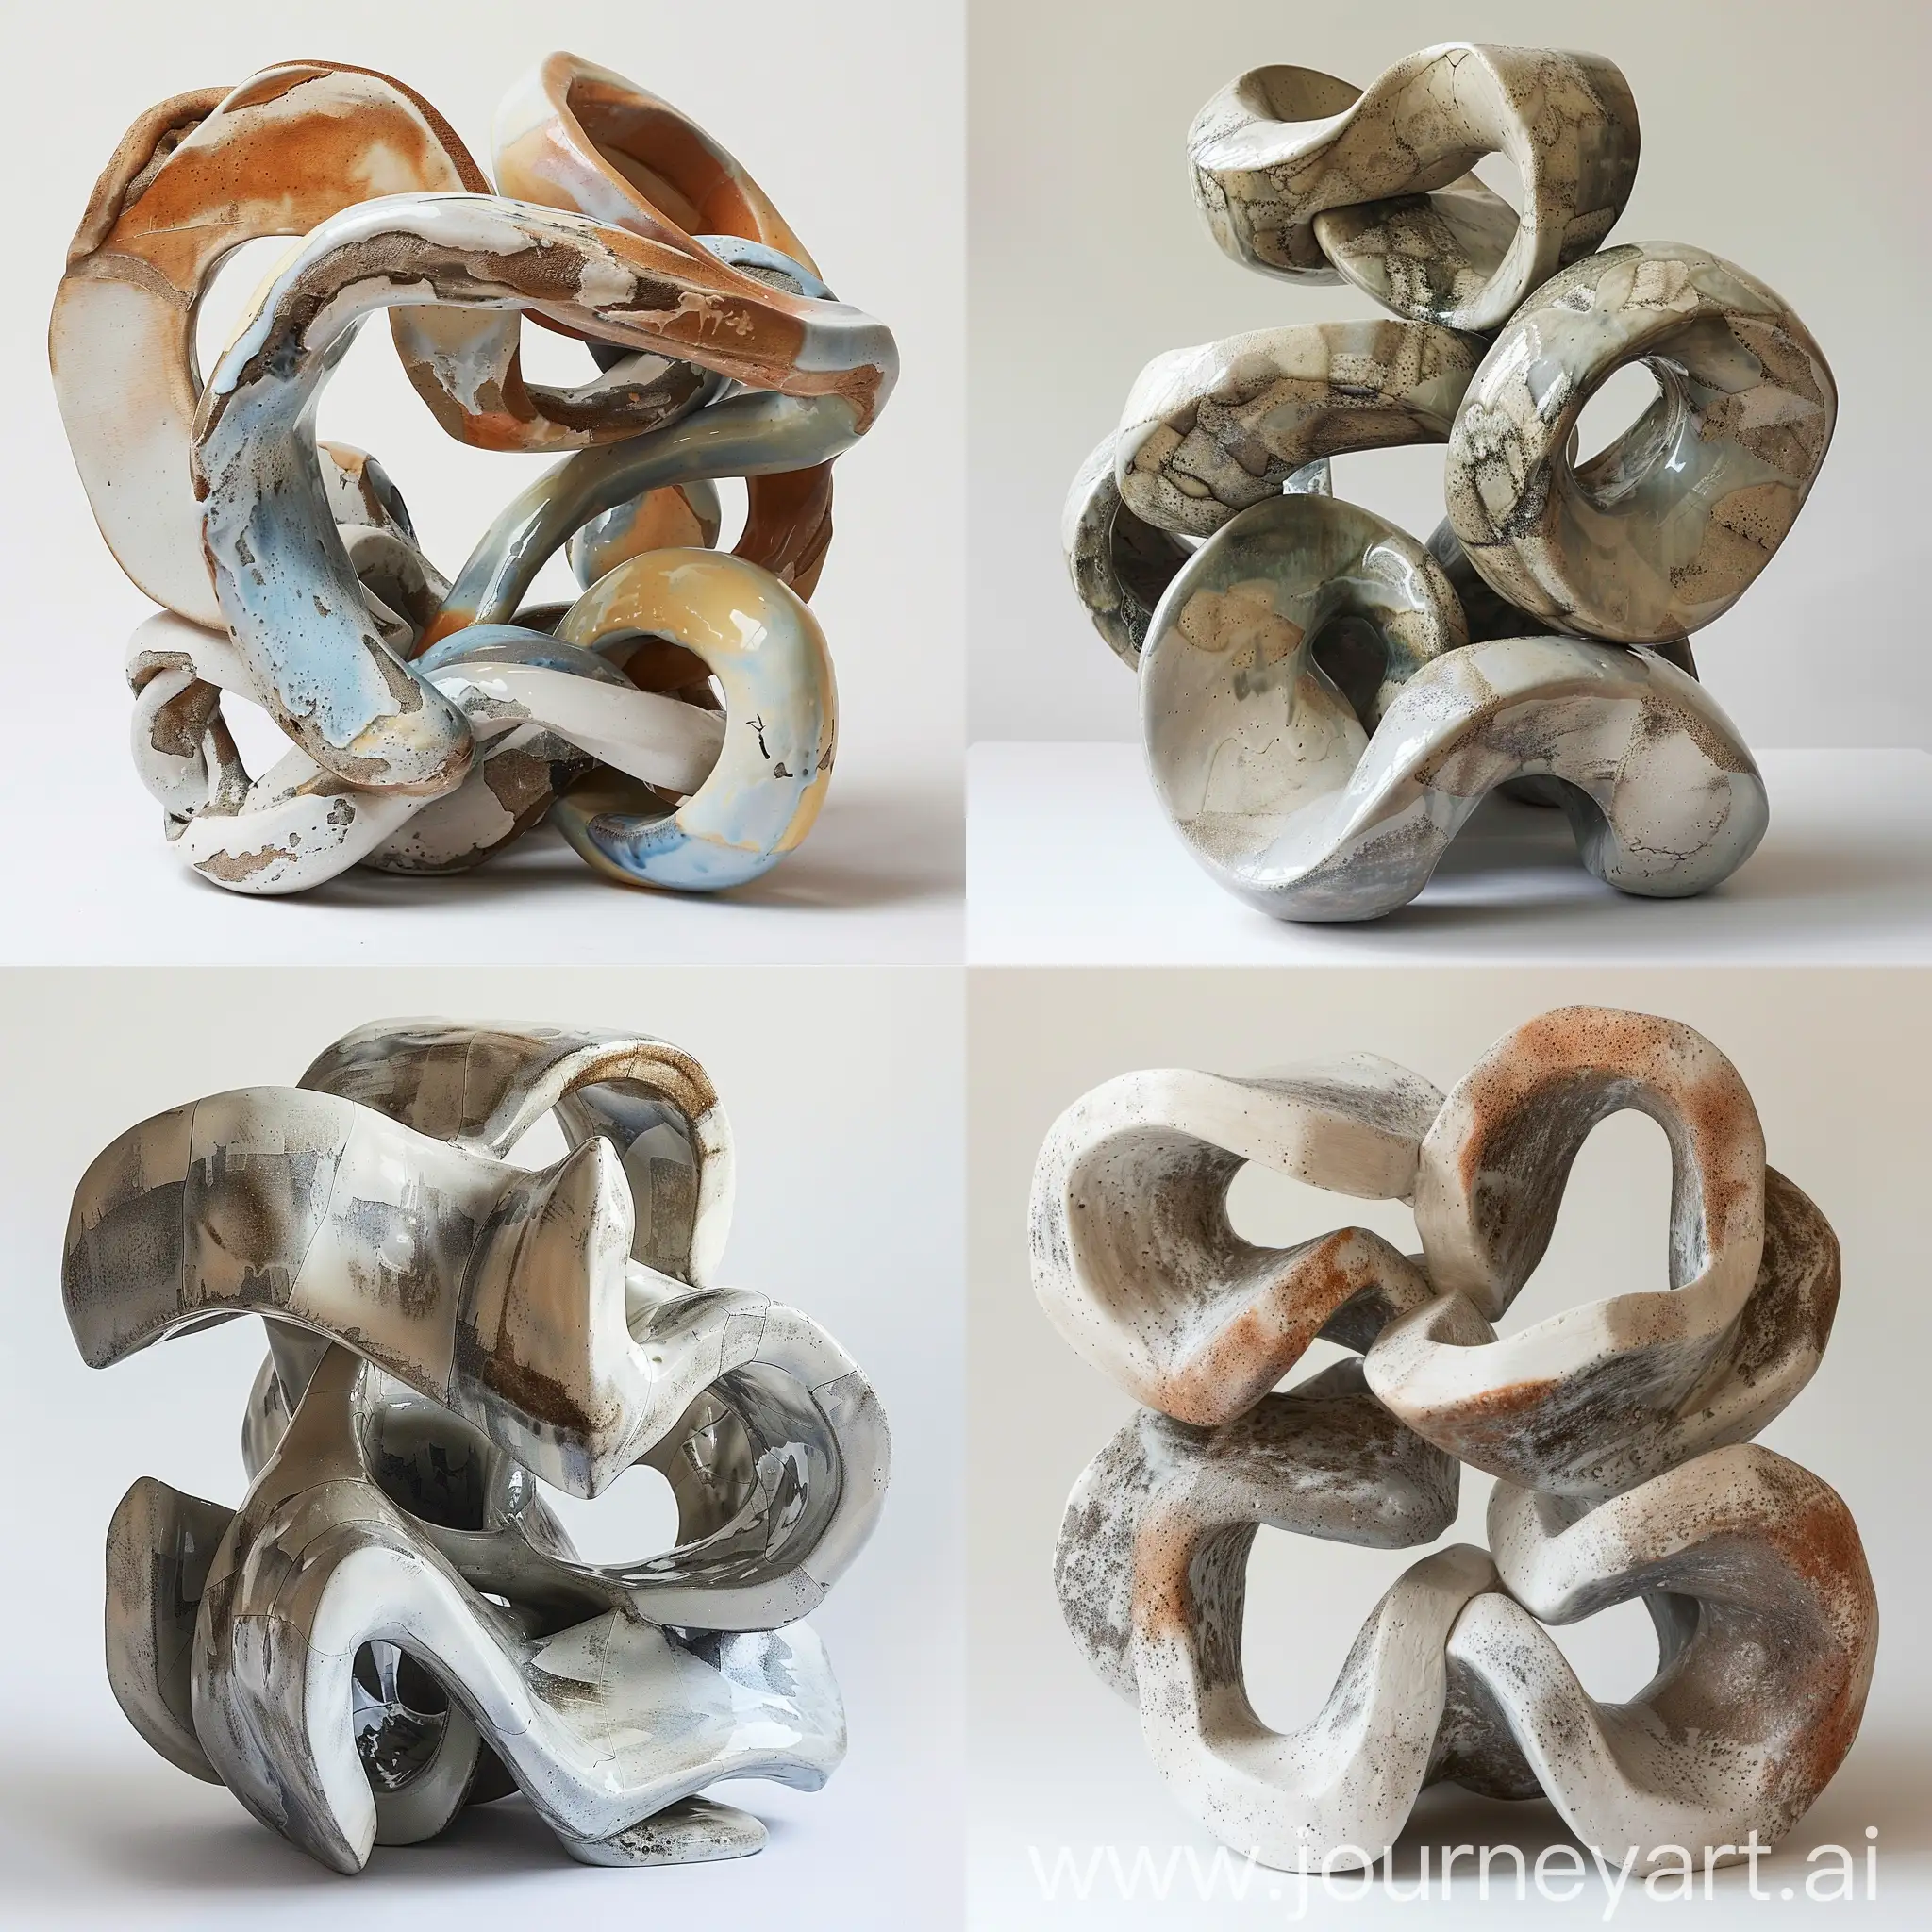 Interplay-of-Materials-in-Contemporary-Ceramic-Art-Sculpture